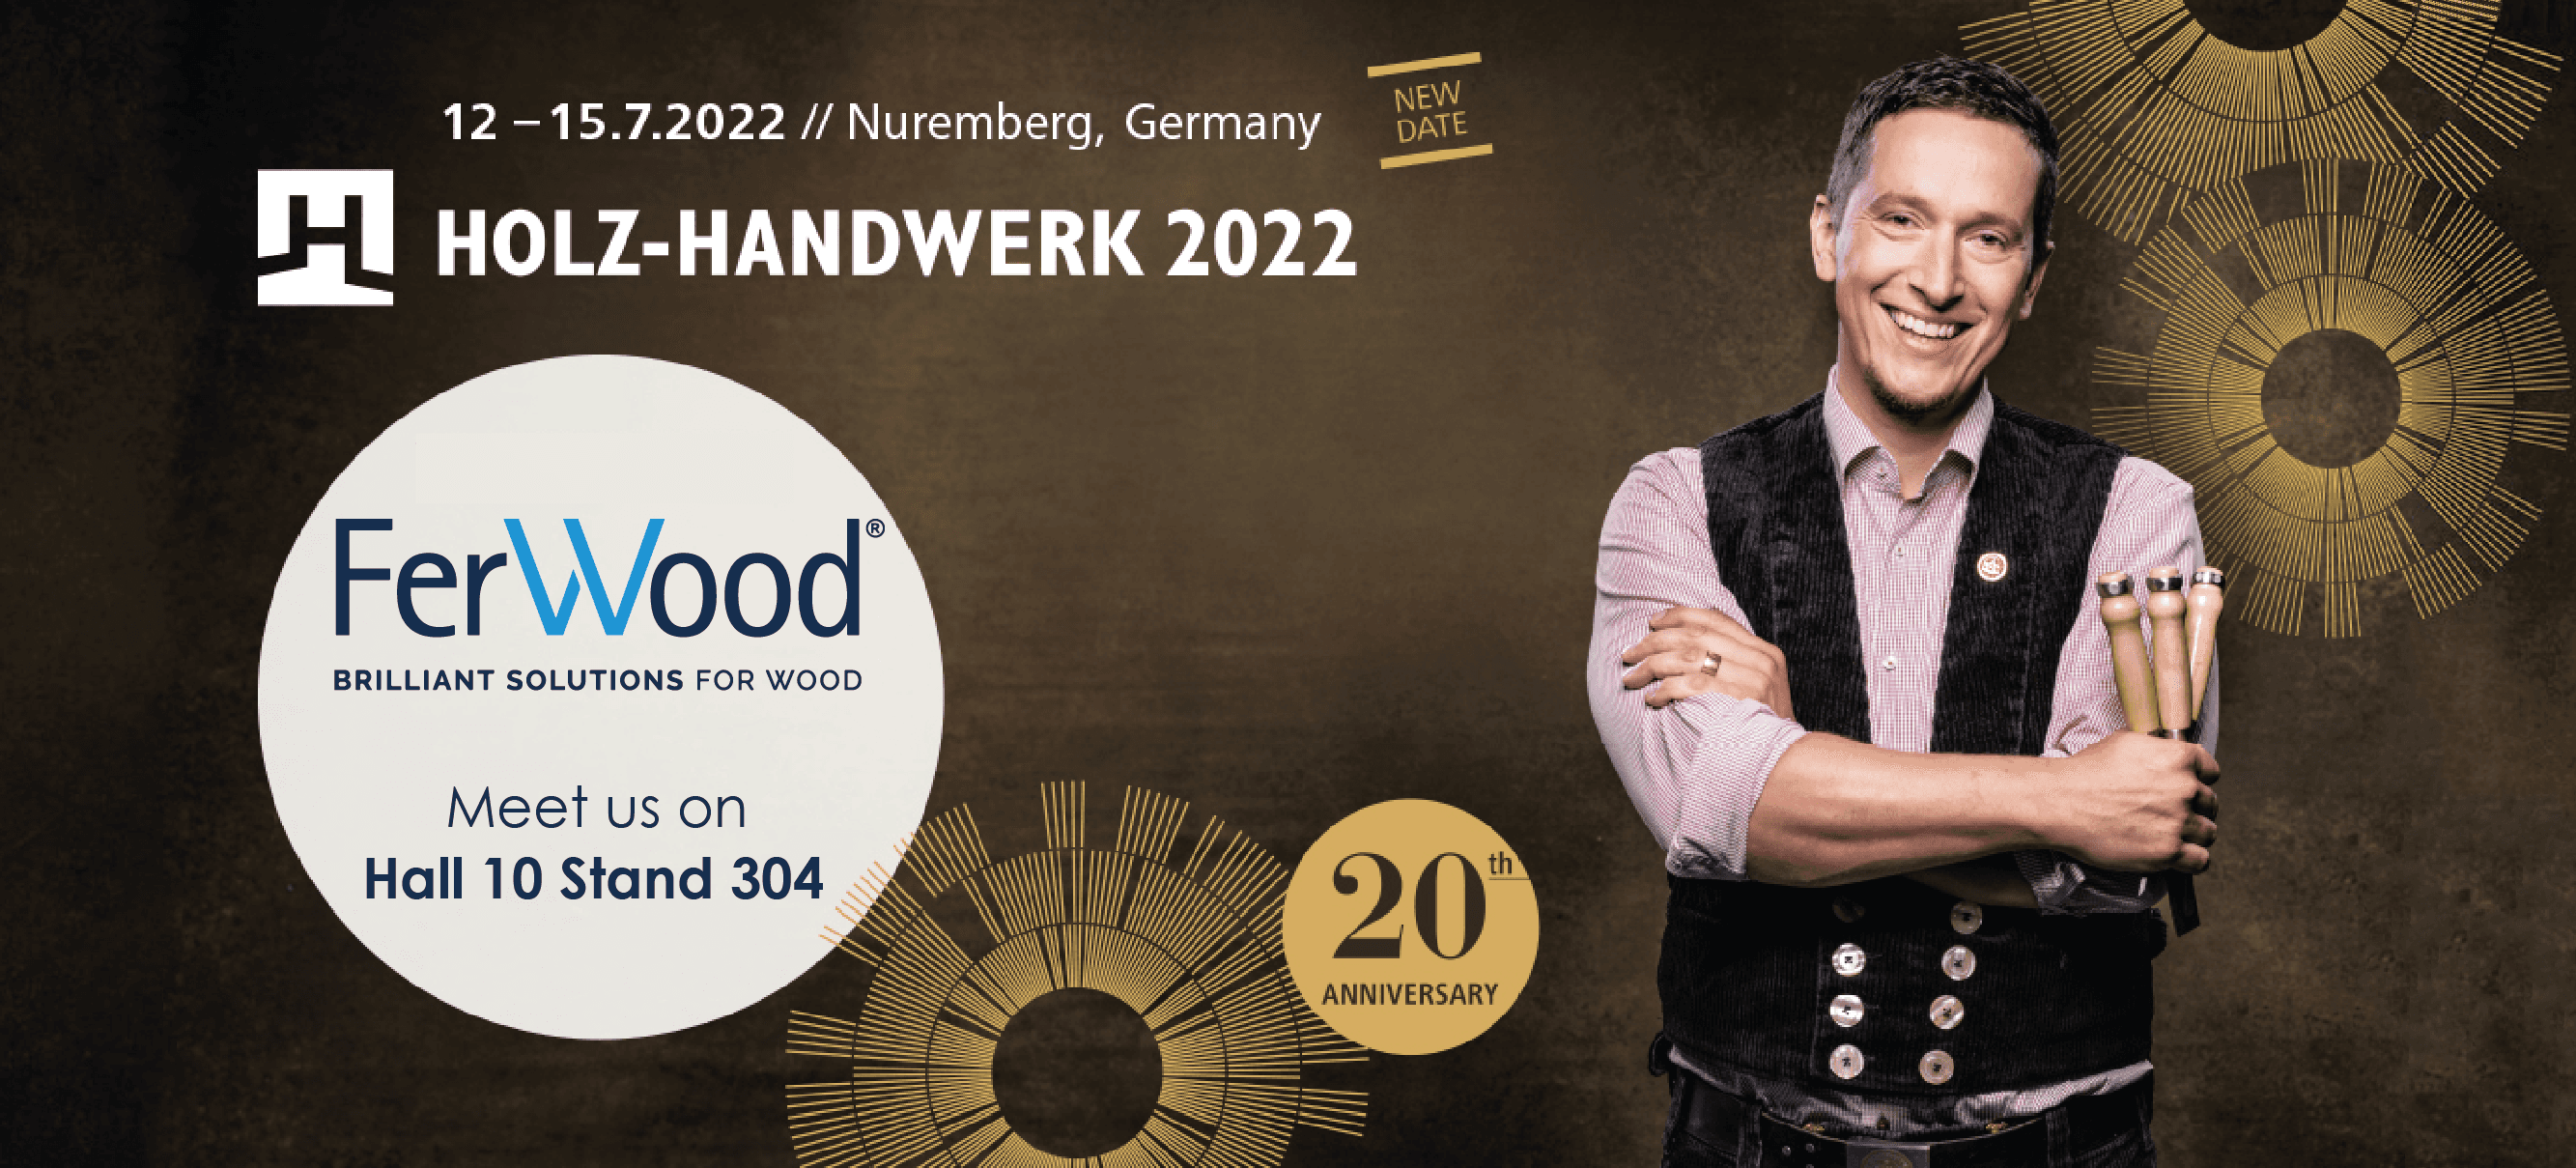 Holz Handwerk 2022 - Hall 10 Stand 304